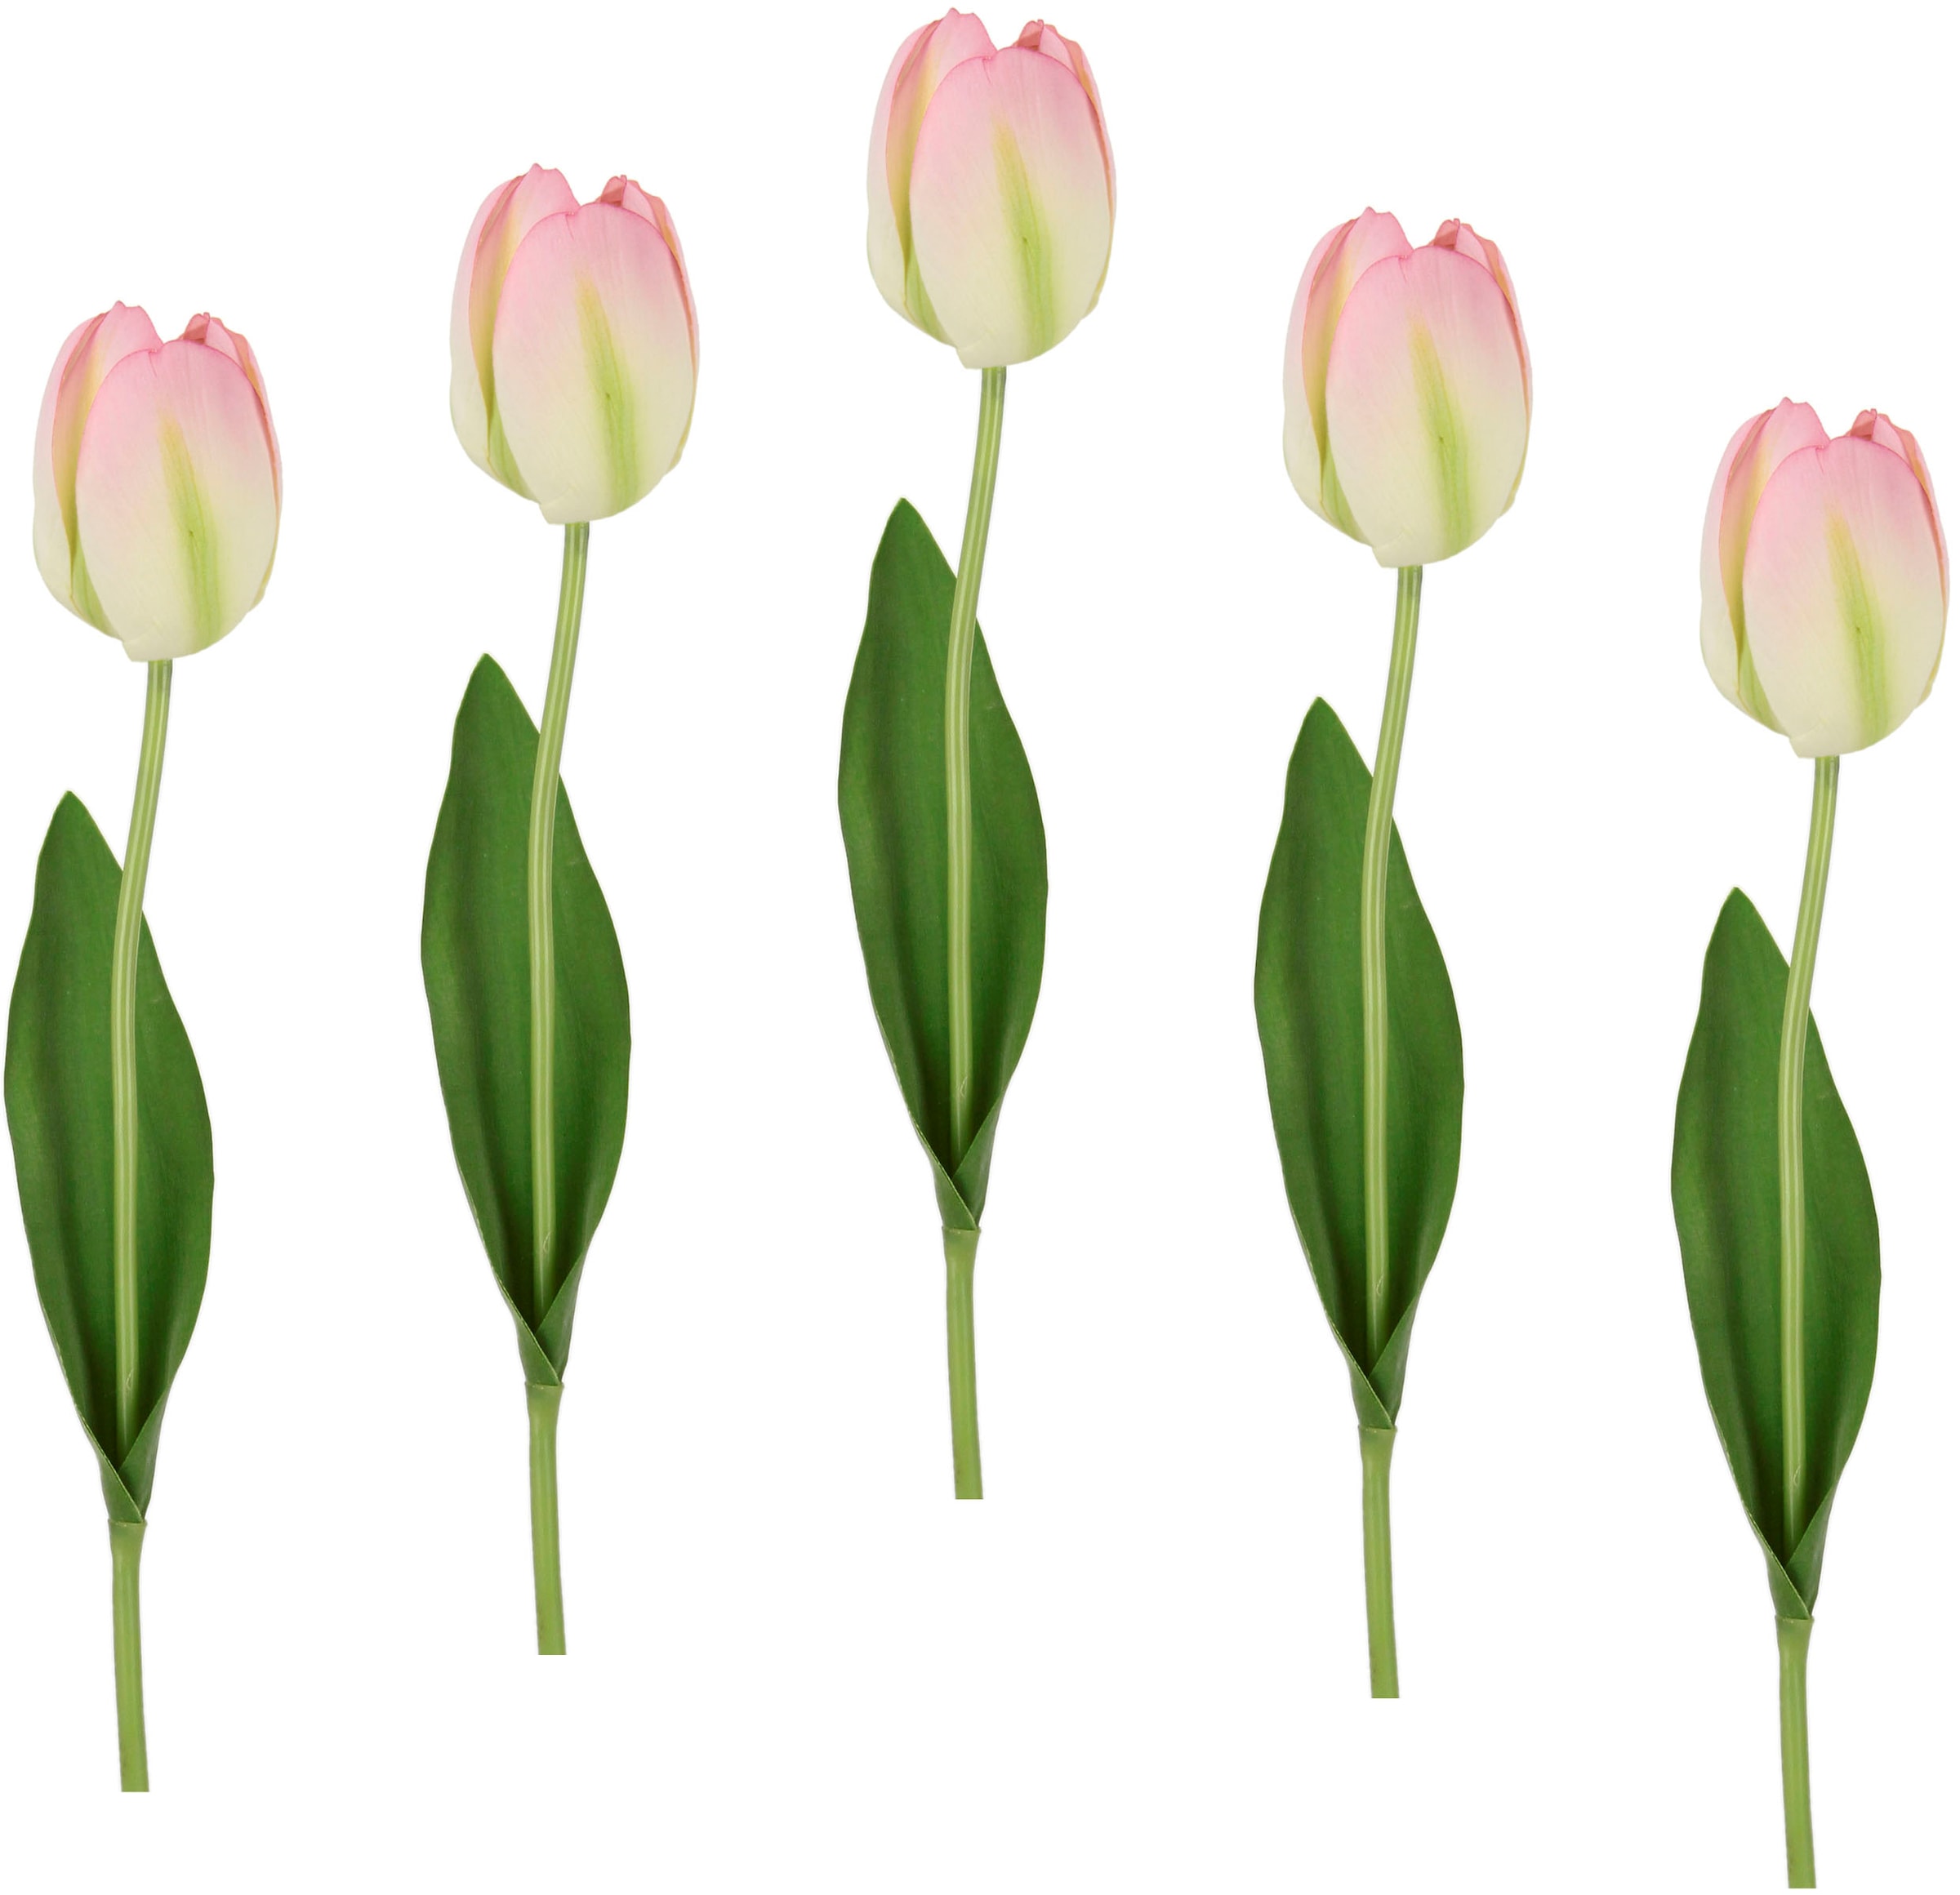 Stielblume kaufen jetzt Tulpen«, 5er I.GE.A. Kunstblumen, Kunstblume Set Tulpenknospen, »Real Touch künstliche